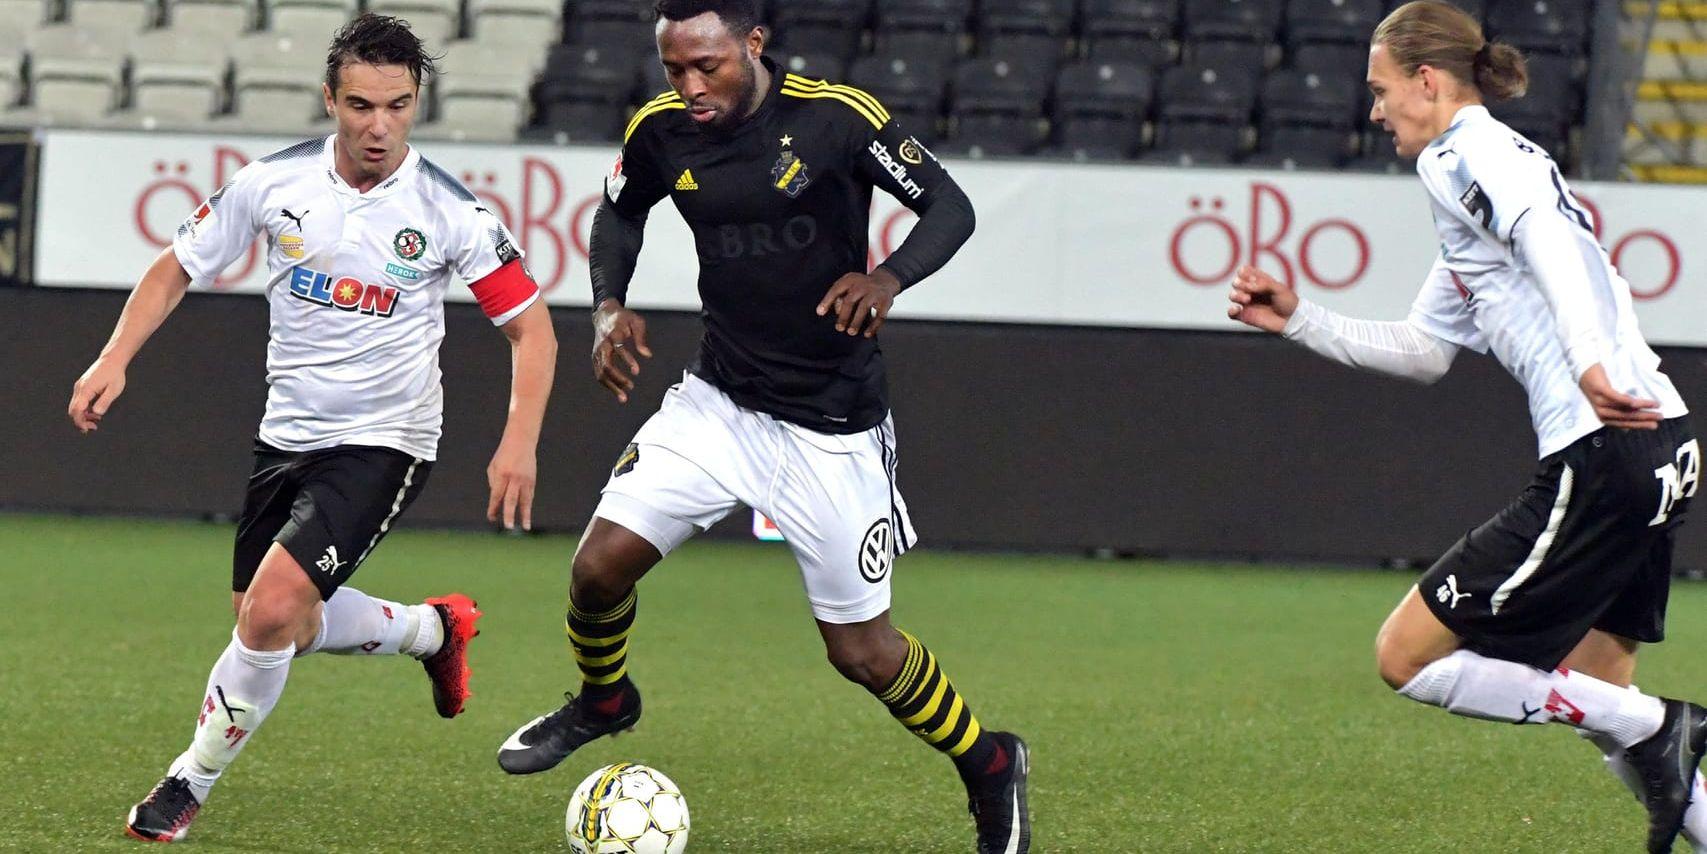 Chinedu Obasi mot Örebro senast anfallaren spelade i AIK. Arkivbild.